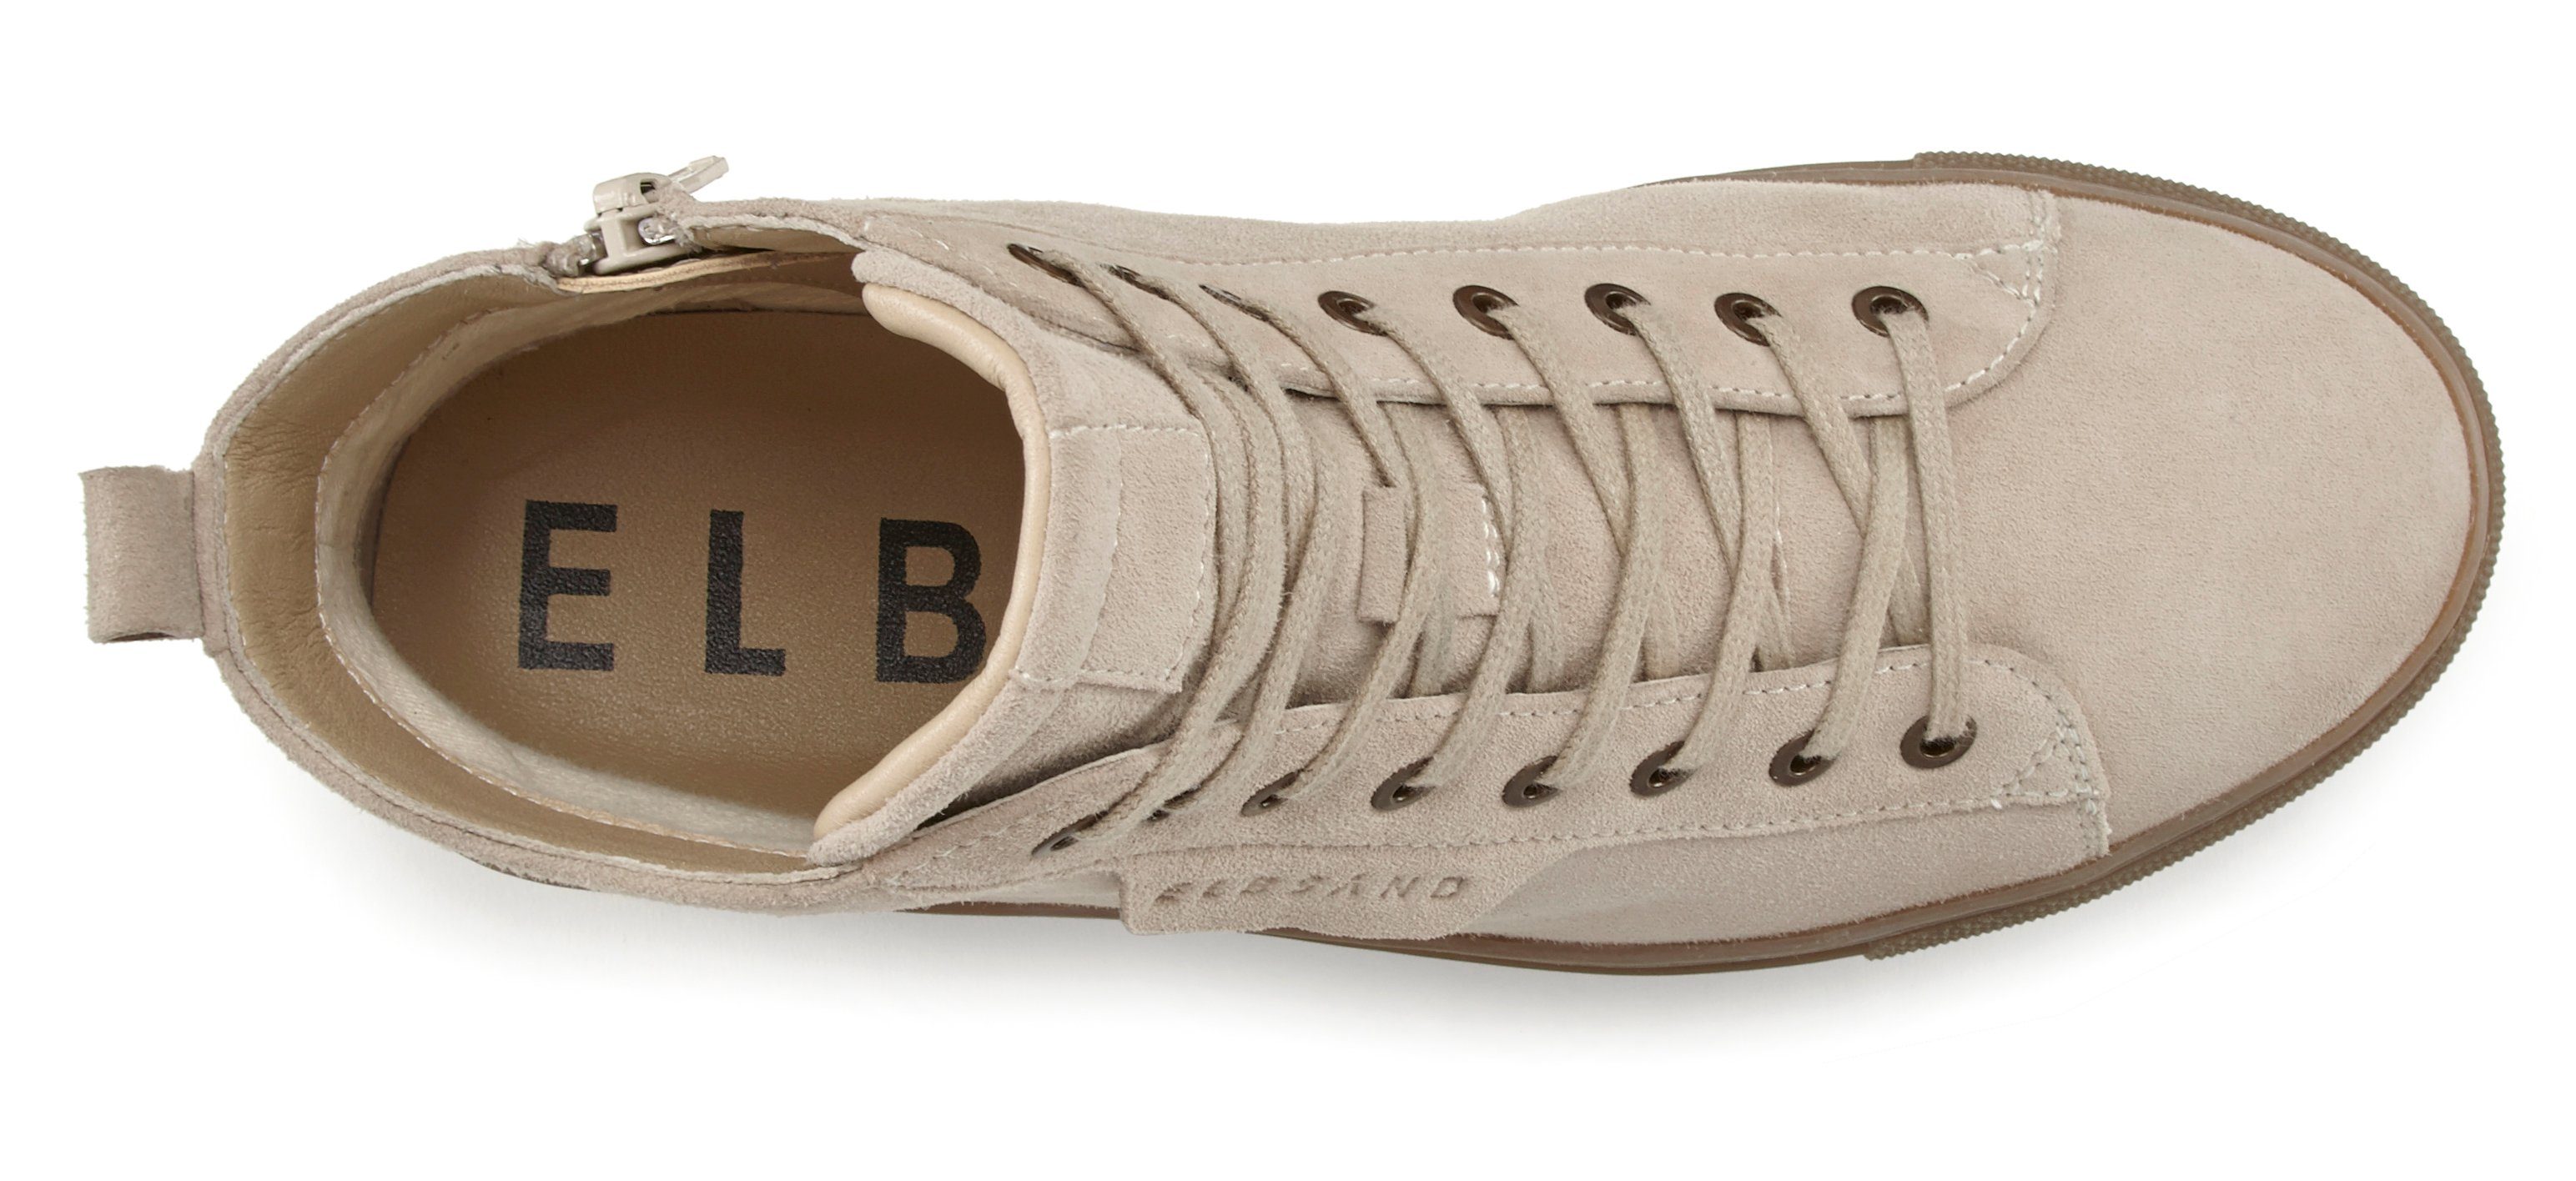 Elbsand Stiefelette Stiefel, Boots, Casual-Look weiches helltaupe High-Top, Leder, Schnür Sneaker